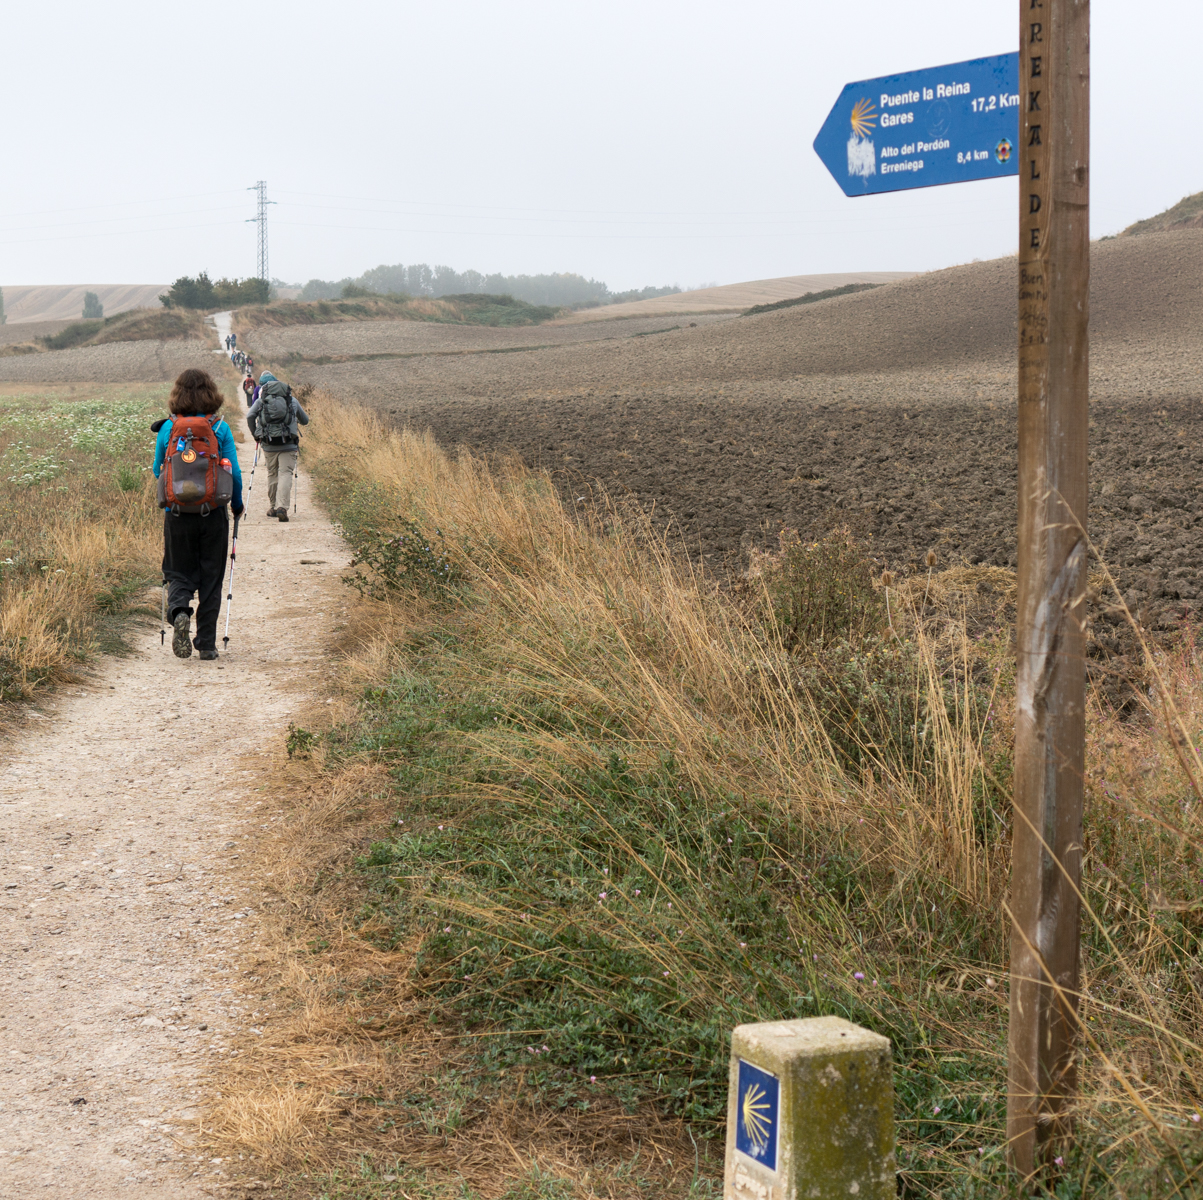 Camino pilgrims walk between agricultural fields 1.8 km west of Cizur Menor, Spain | Photo by Mike Hudak